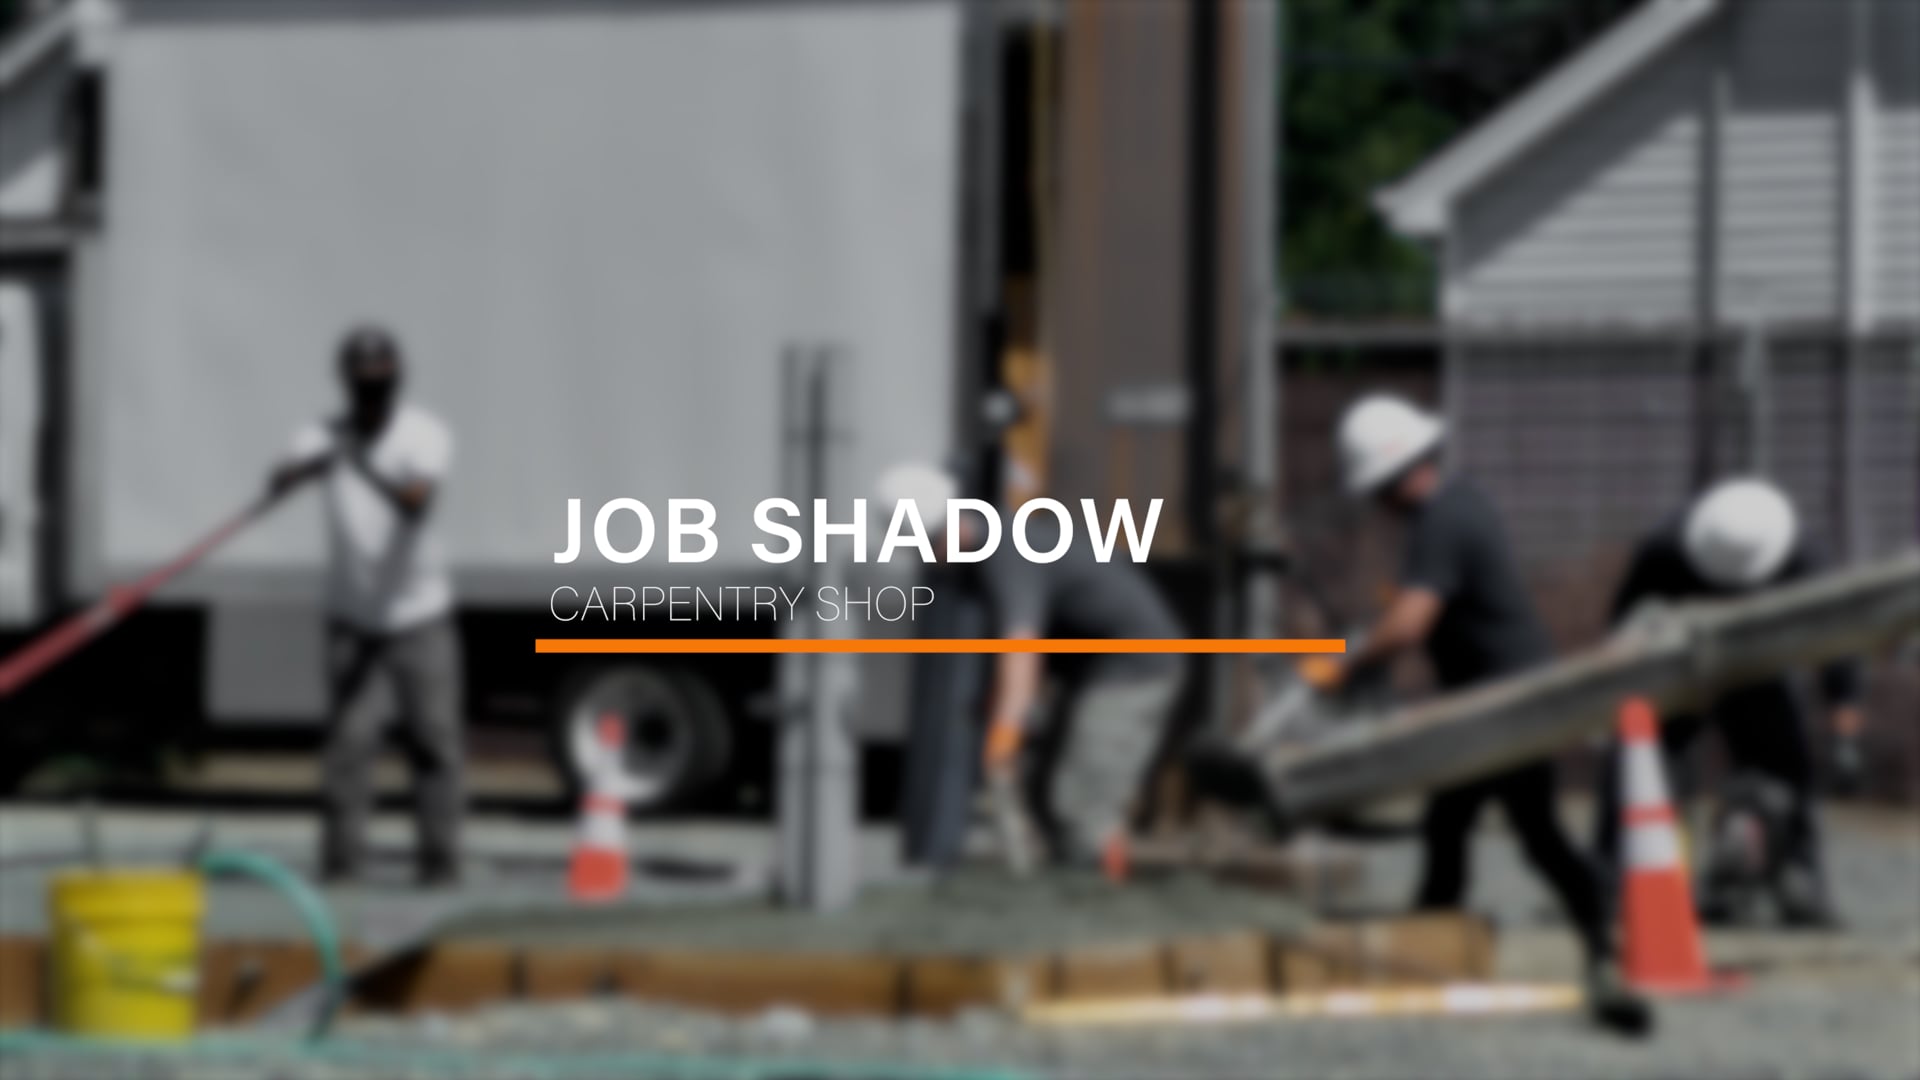 Job Shadow: Carpentry Shop